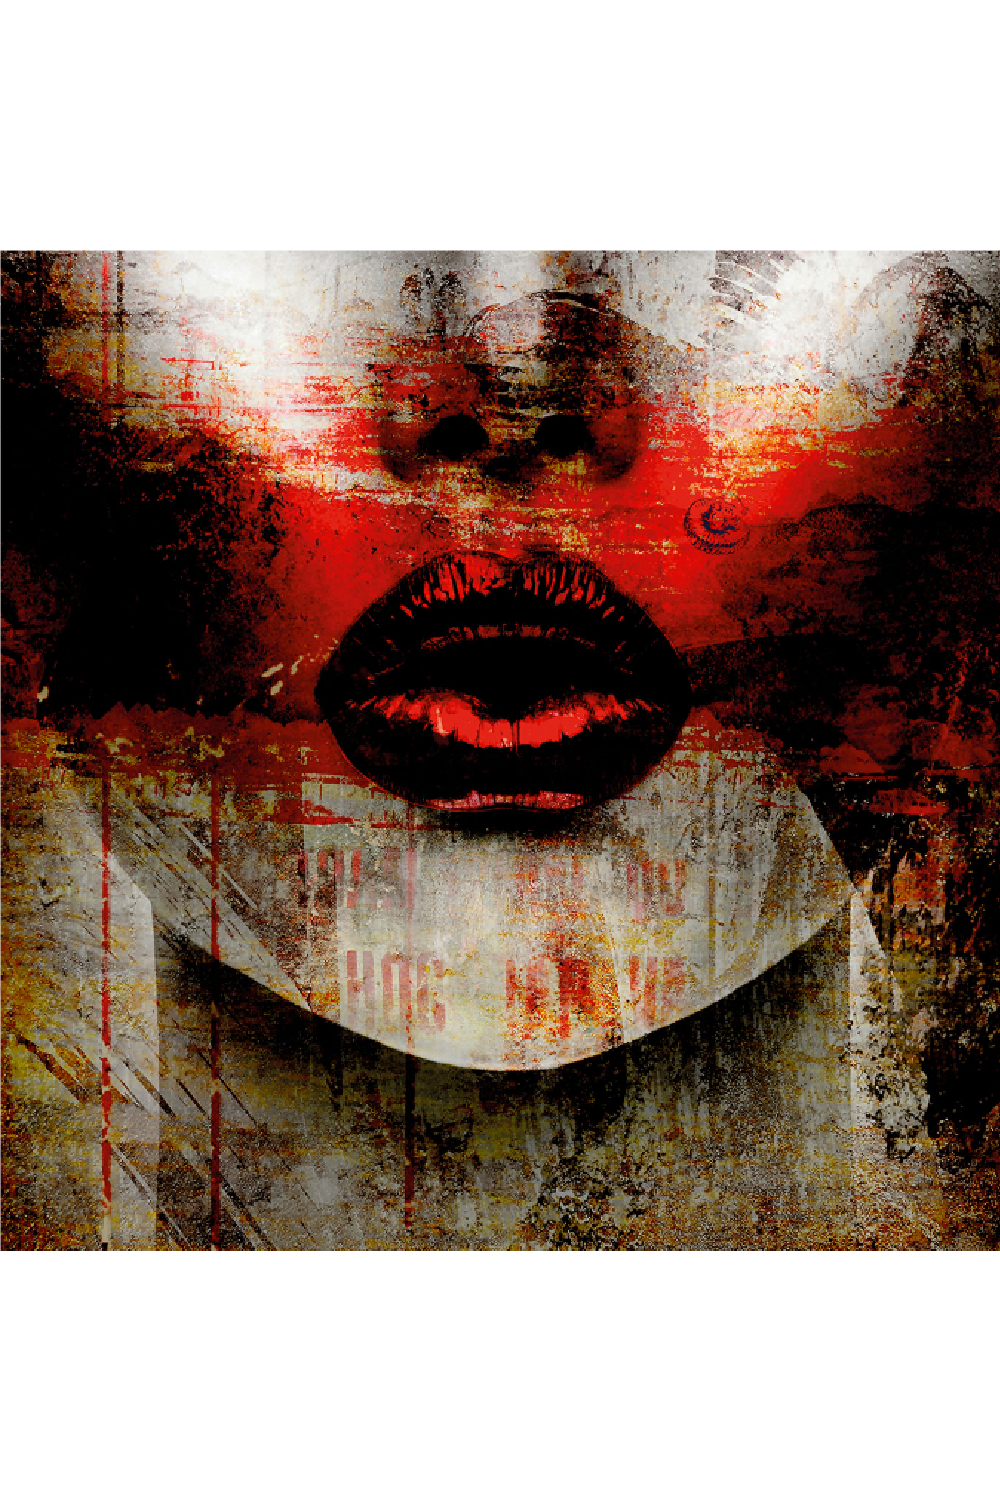 Woman's Lips Decorative Image | Andrew Martin Red Kiss | OROA